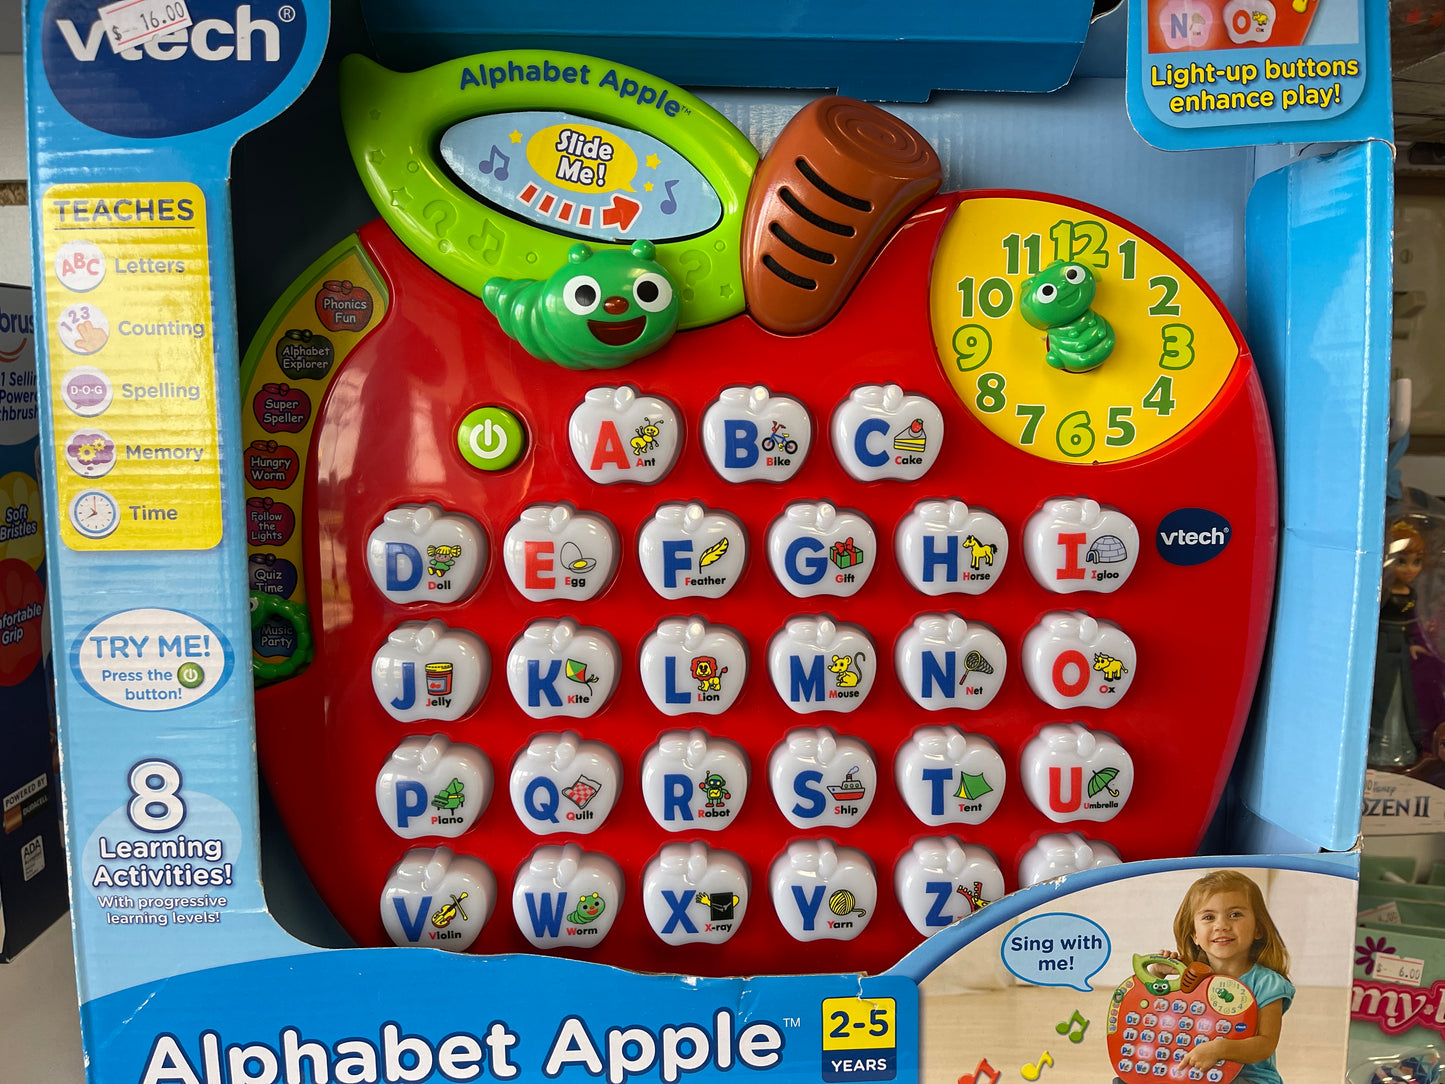 Vtech Alphabet Apple